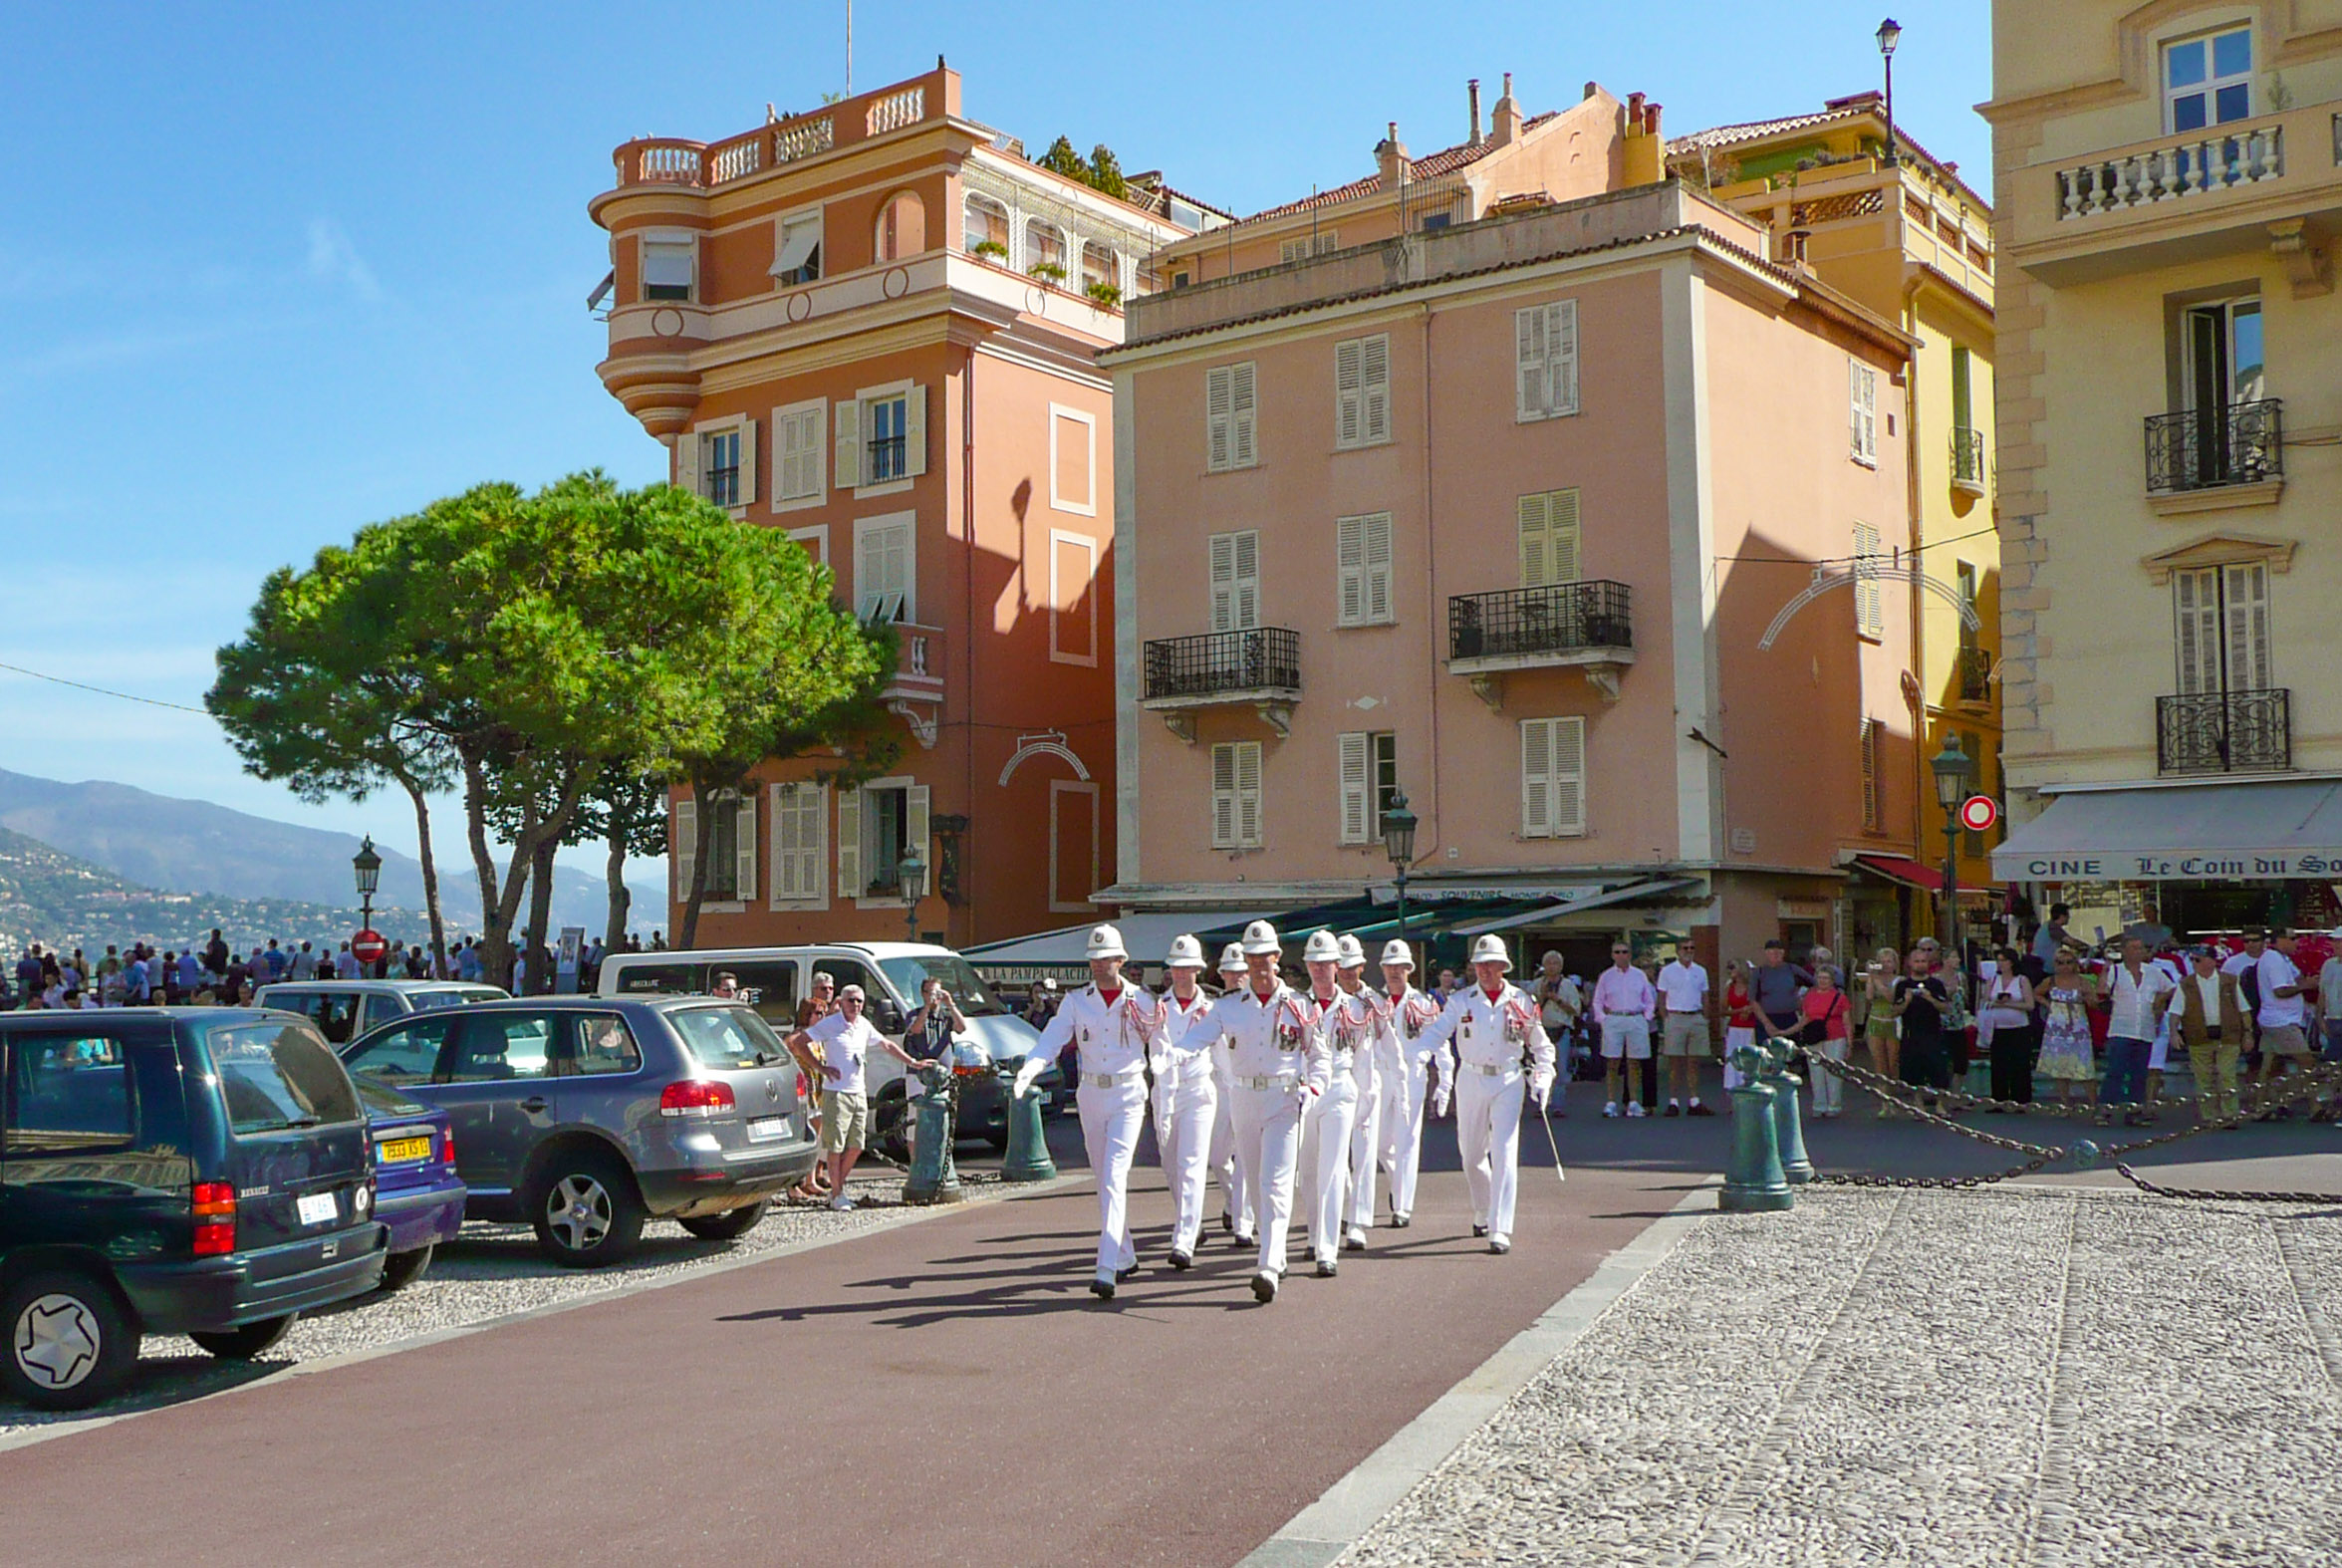 Rocher de Monaco - Changing of the Guards © Nikolai Karaneschev - licence [CC BY 3.0] from Wikimedia Commons